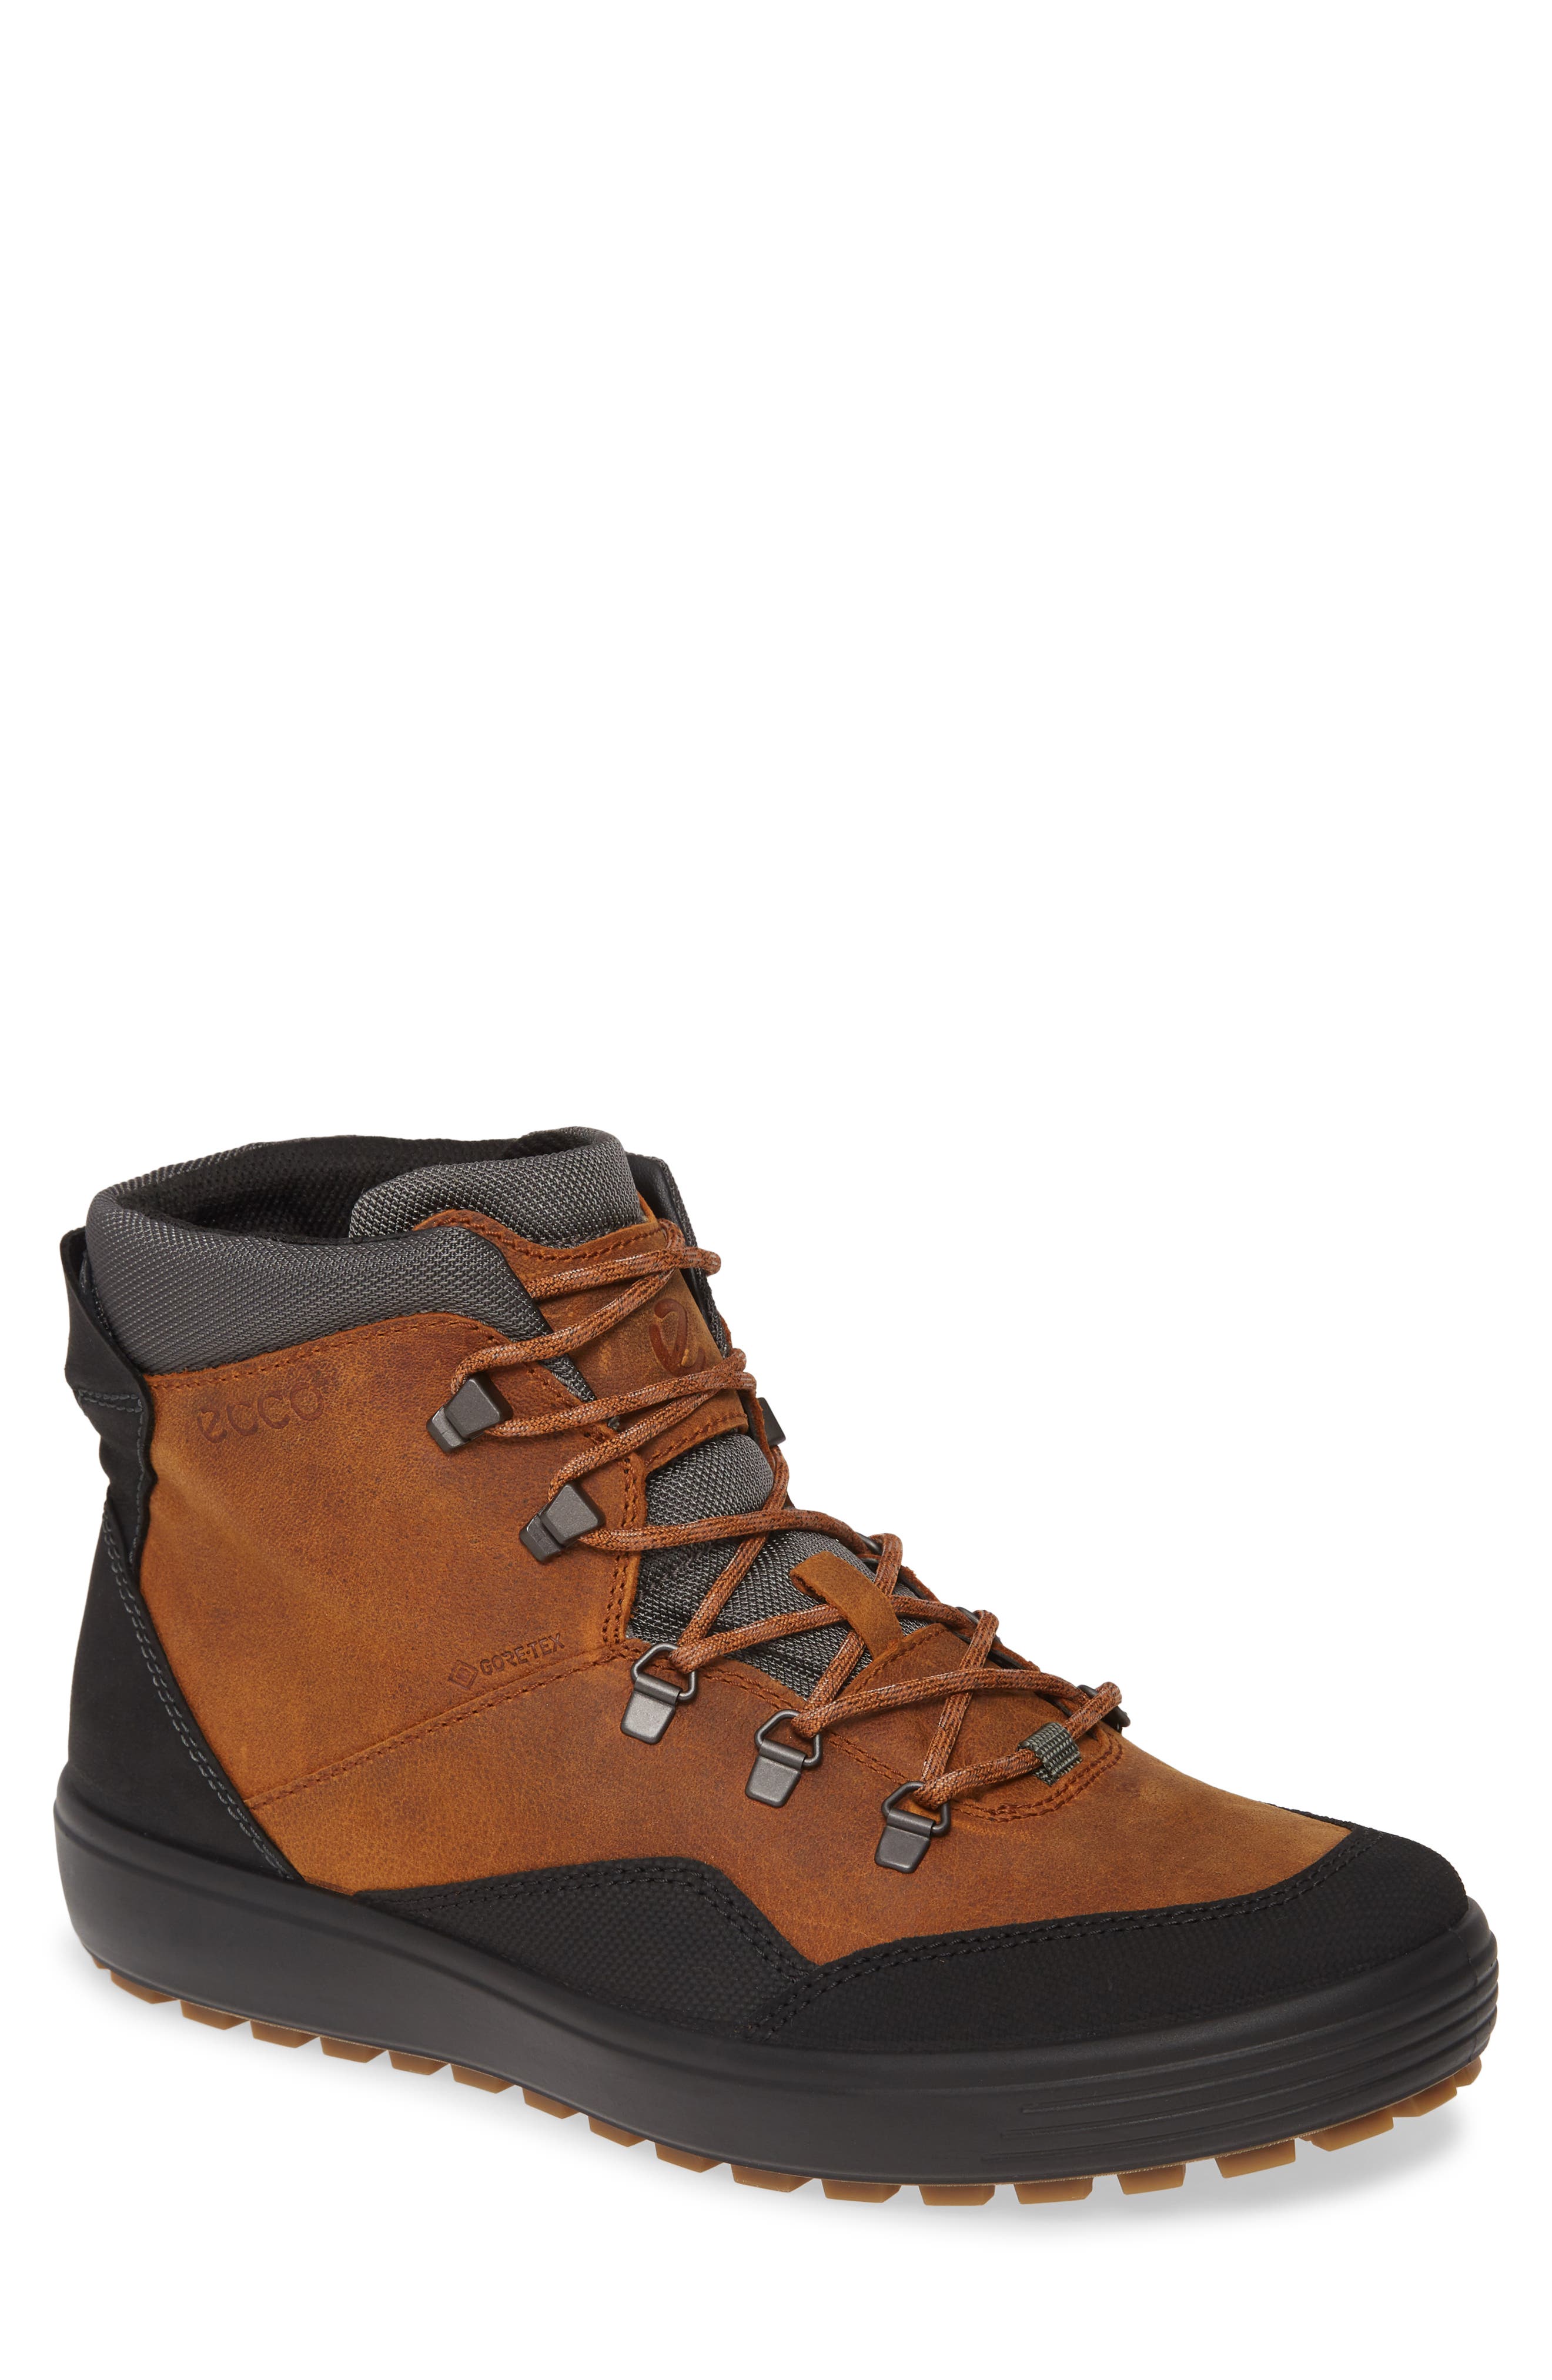 UPC 825840089967 product image for Men's Ecco Soft 7 Tred Terrain High Sneaker, Size 14-14.5US / 48EU - Brown | upcitemdb.com